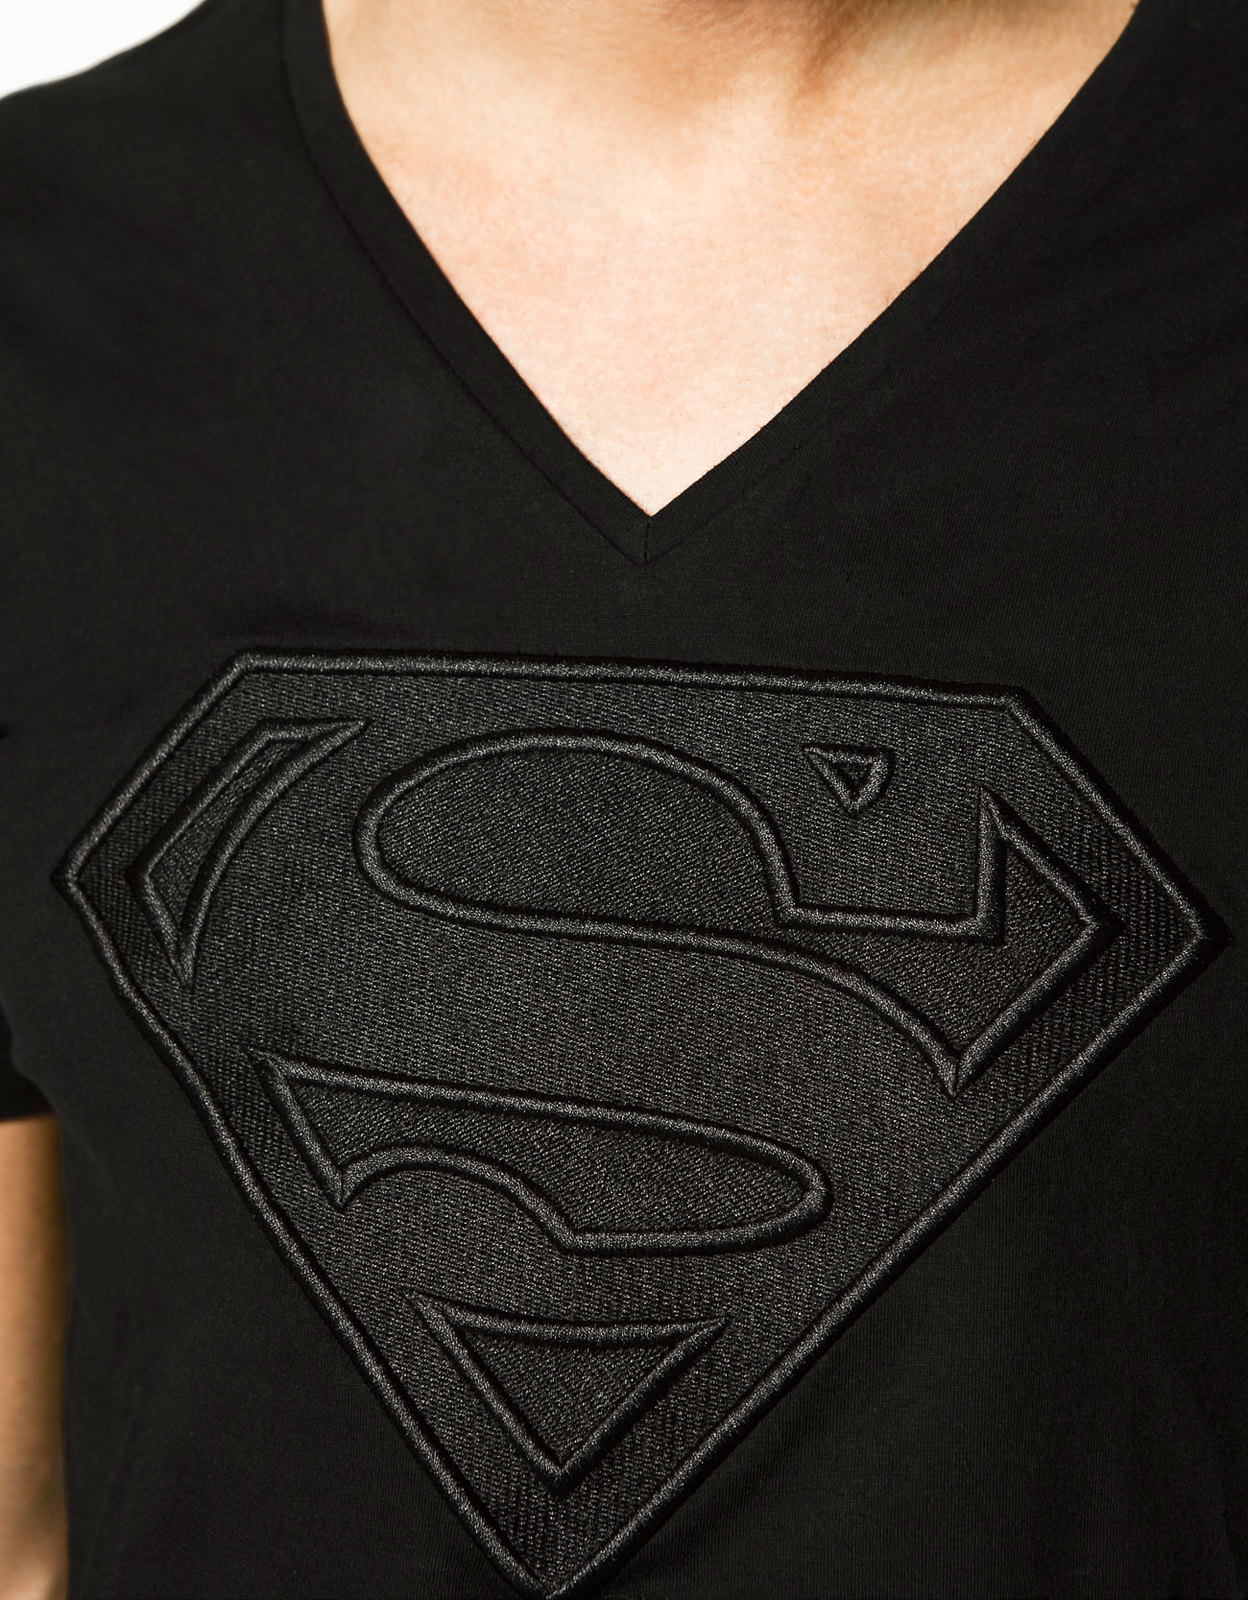 Zara Superman póló 2012.2.13 fotója